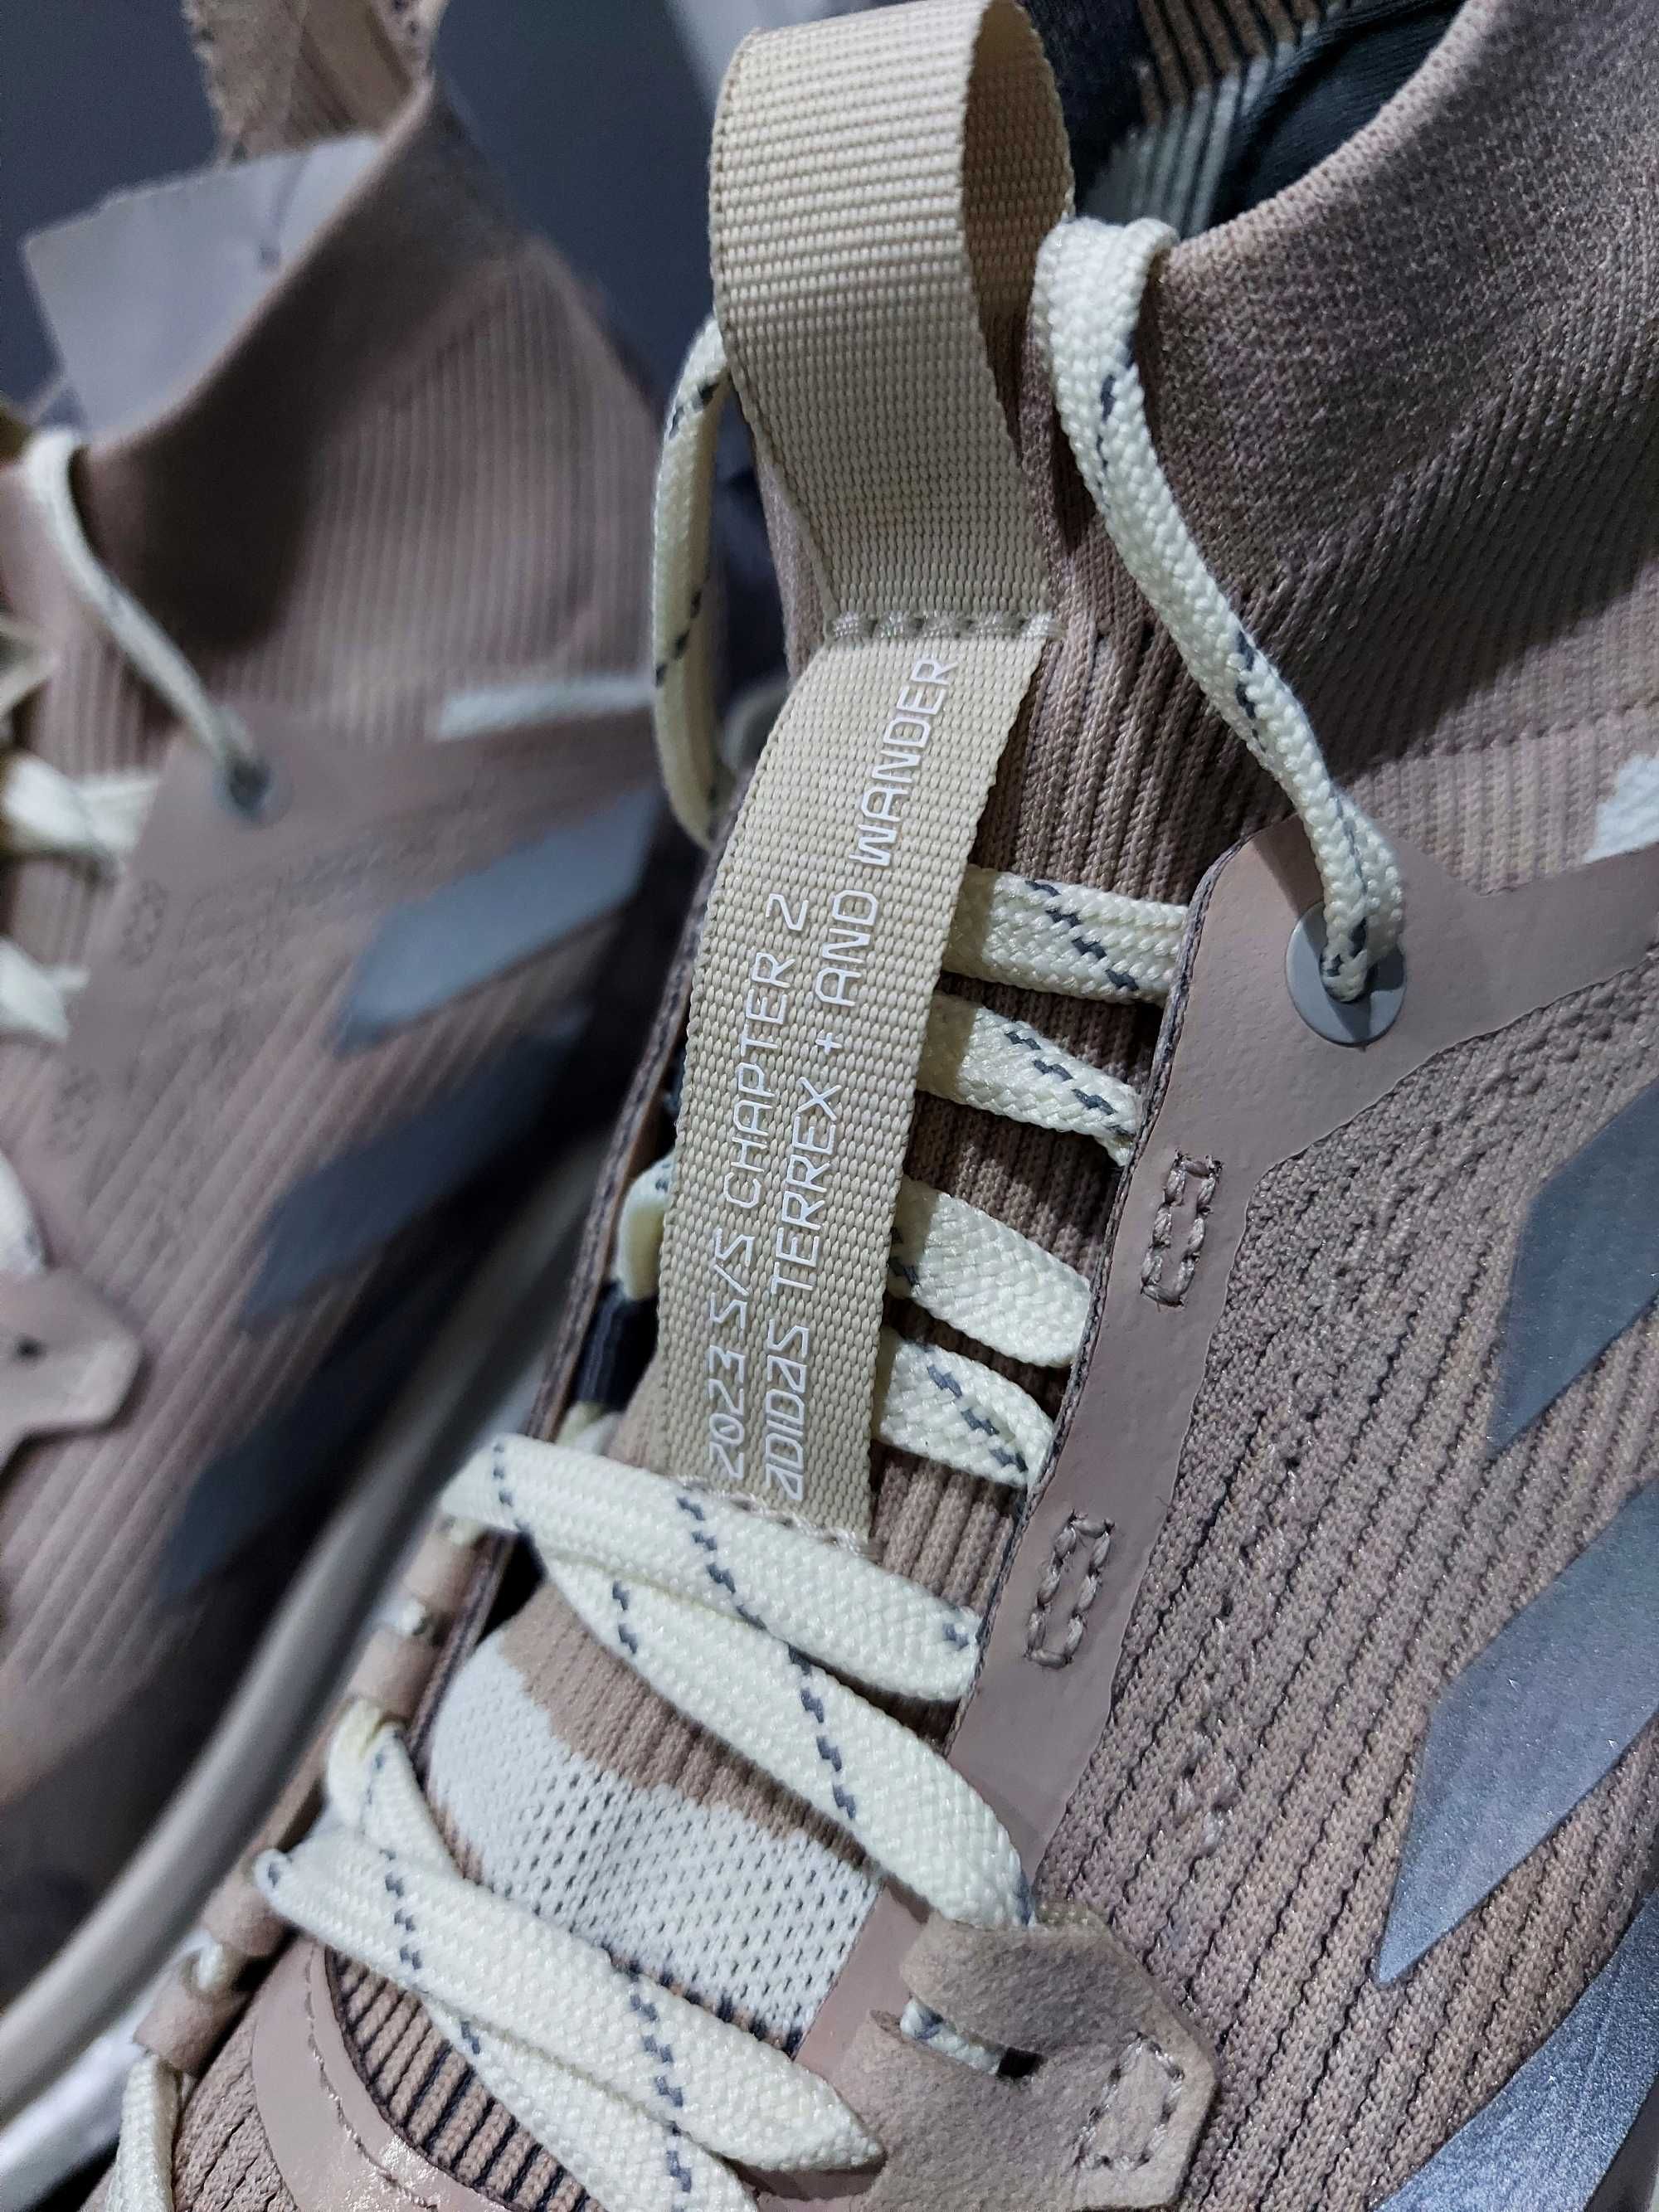 Adidas buty trekkingowe Terrex Free Hiker 2.0 r. 39 1/3 | HQ1443